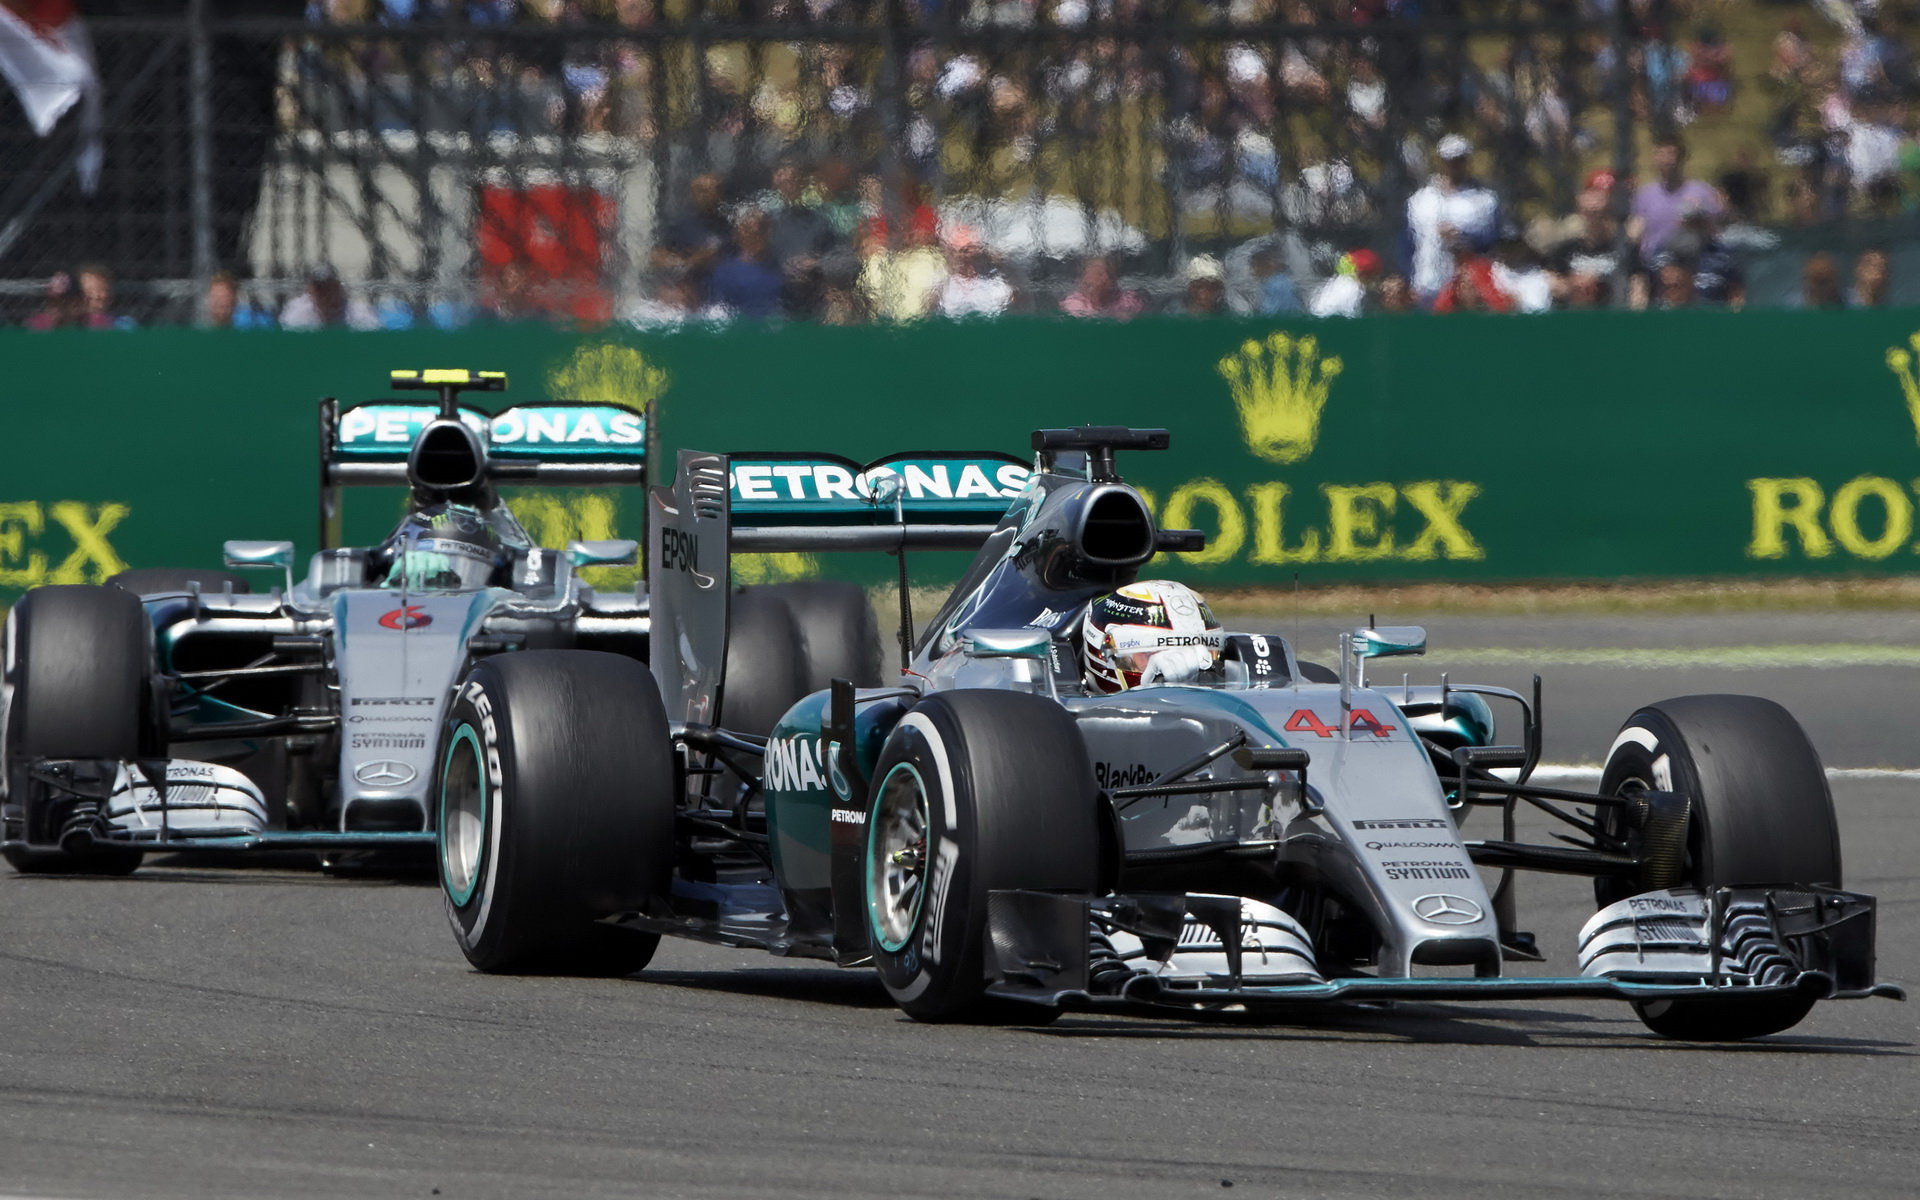 Hamilton opět před Rosbergem